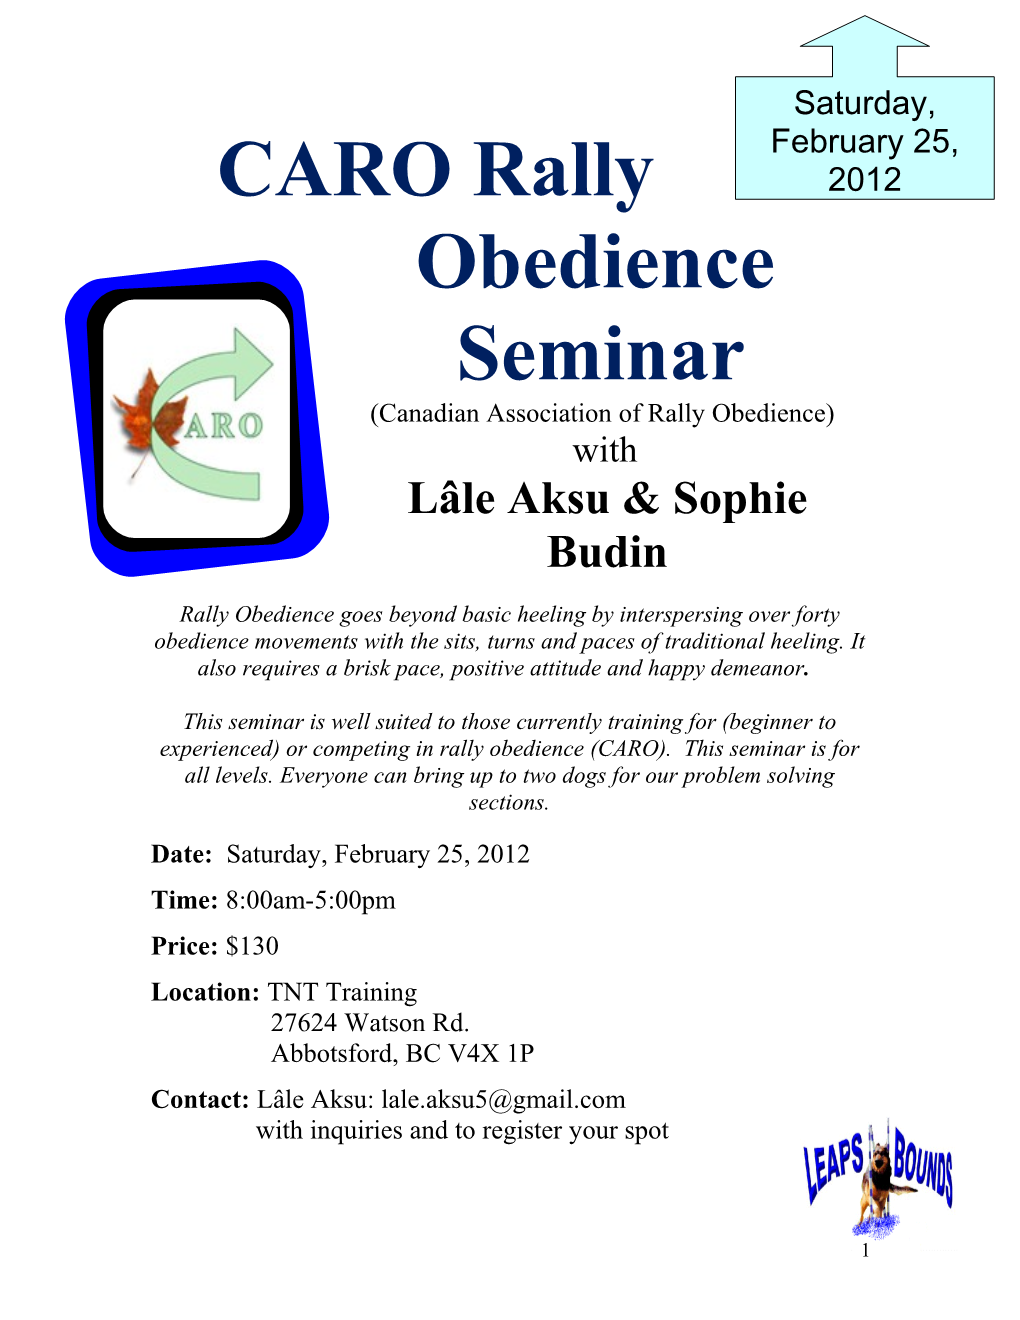 CARO Rally Obedience Seminar